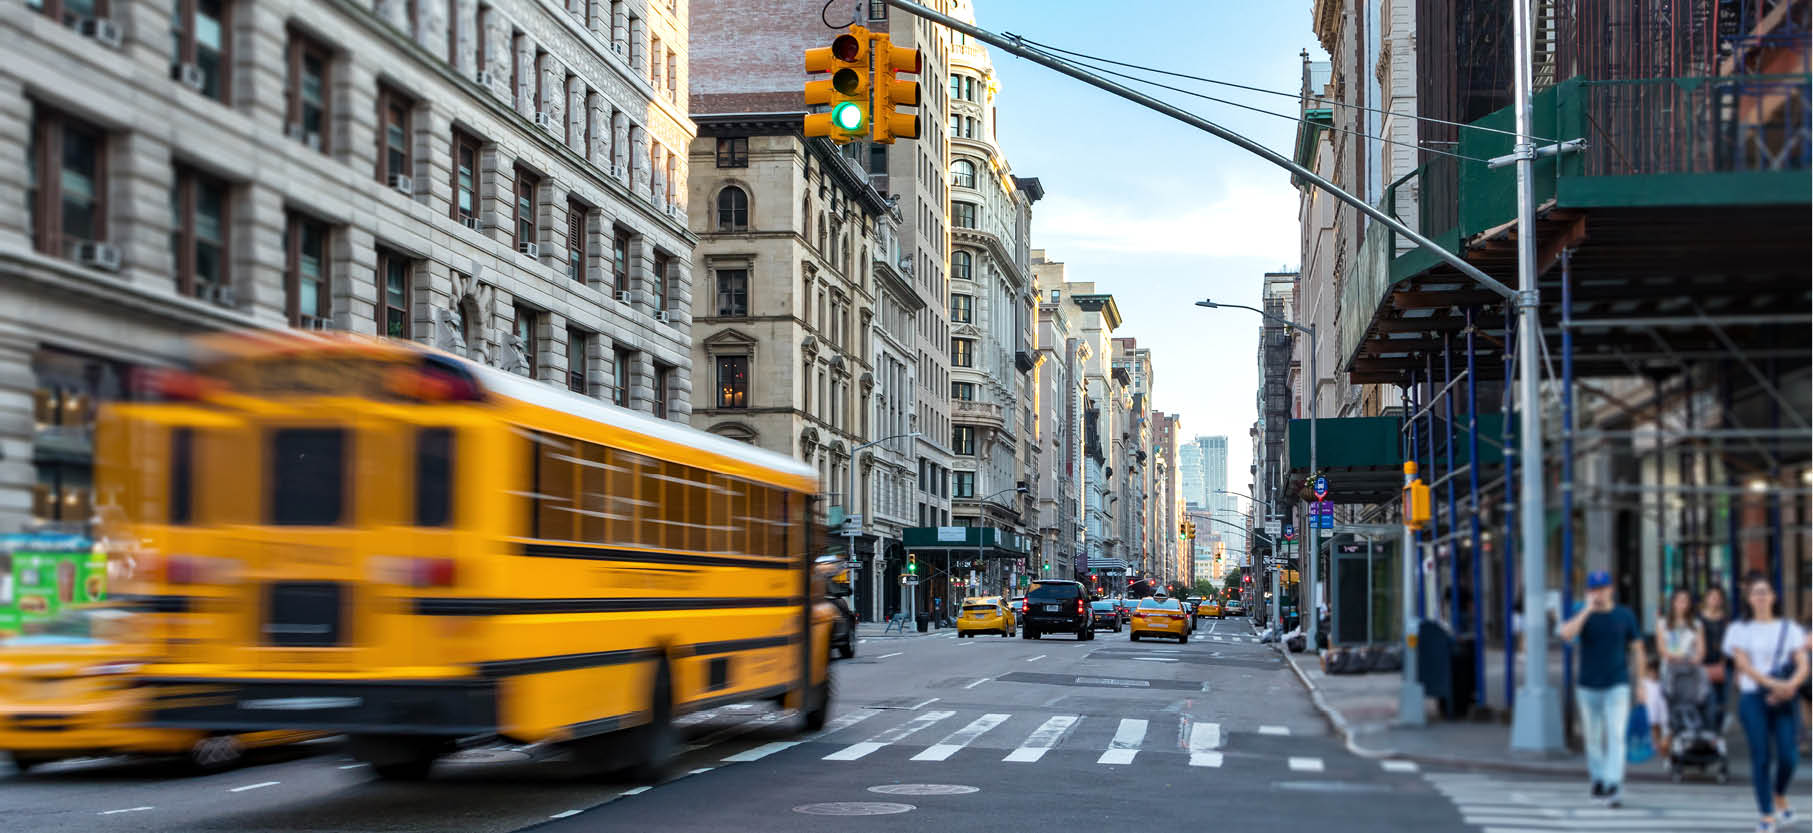 A school bus drives through NYC